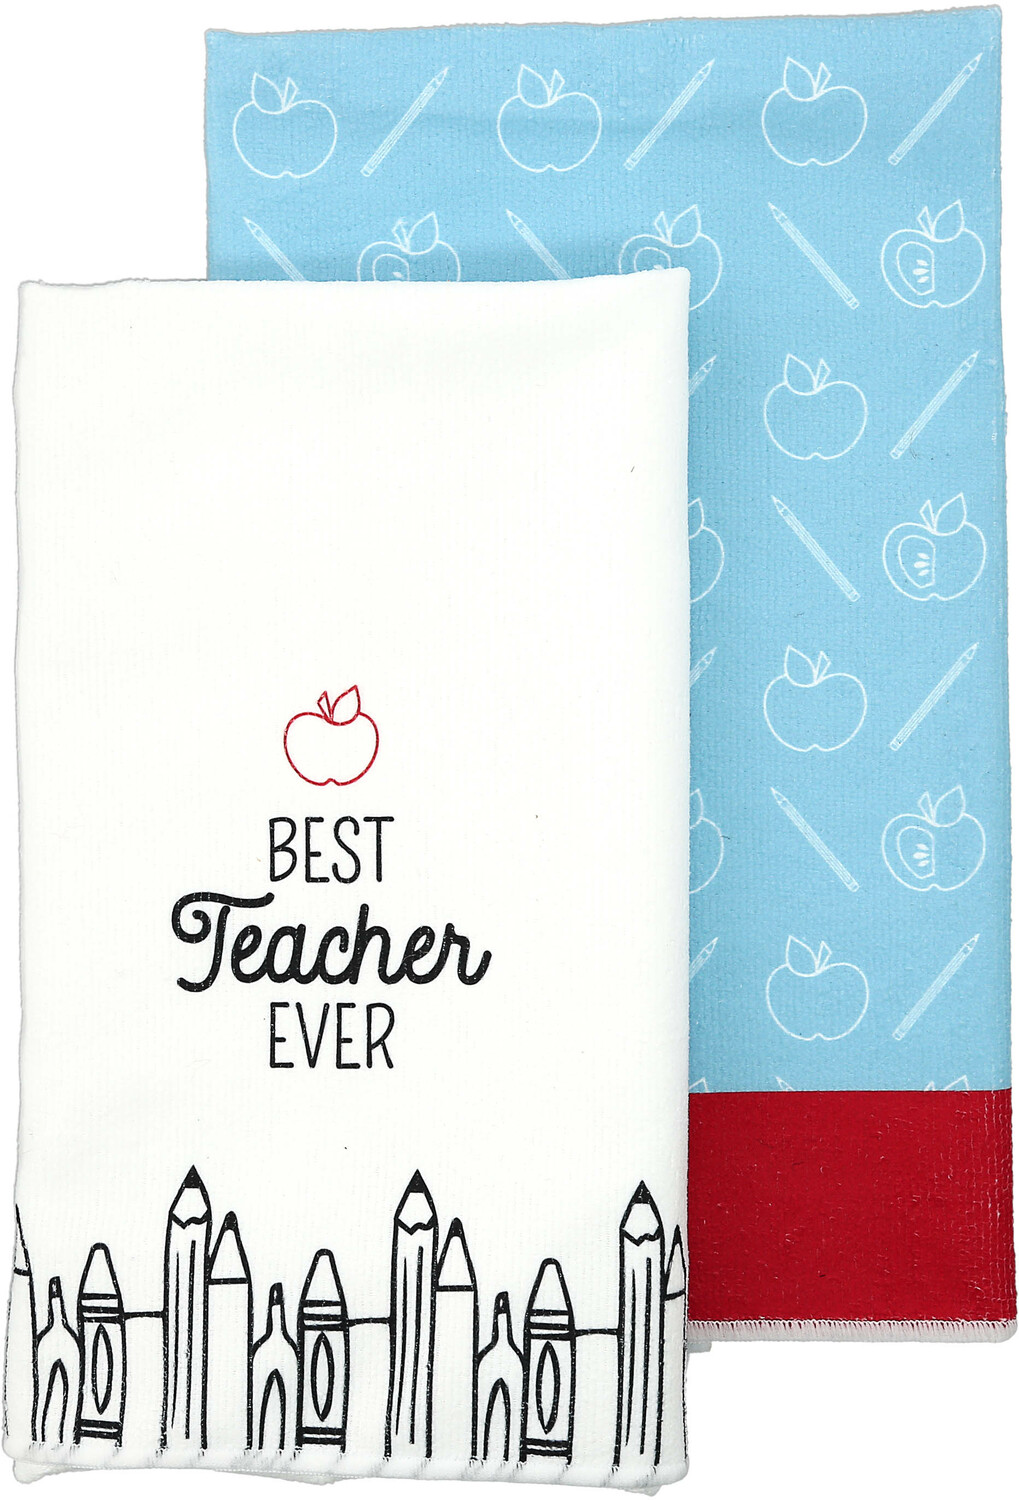 Best Teacher Ever by Teachable Moments - Best Teacher Ever - Tea Towel Gift Set
(2 - 19.75" x 27.5")